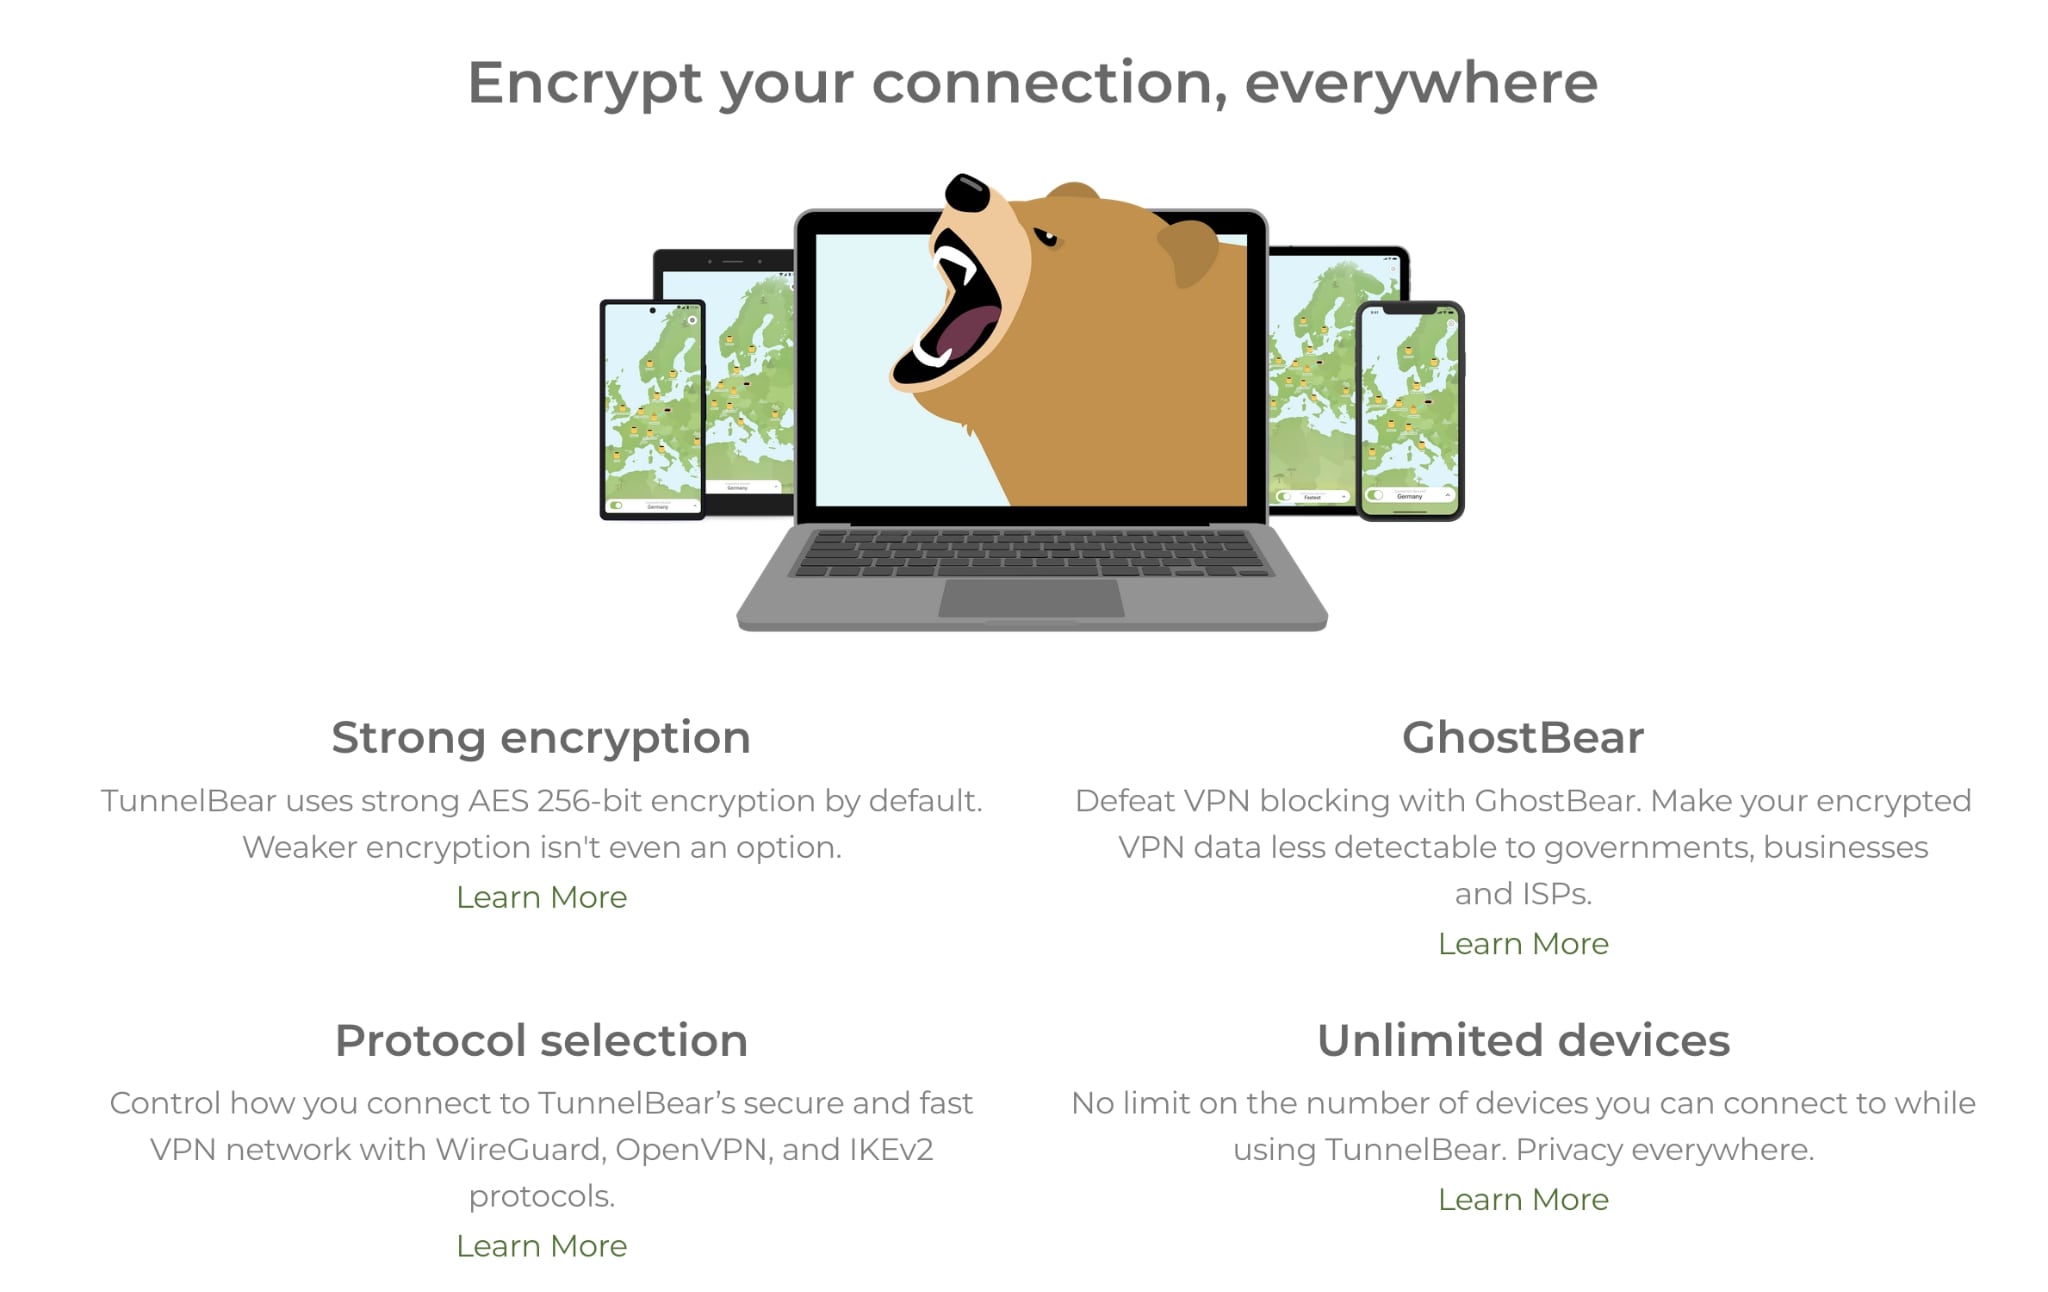 TunnelBear encryption standards